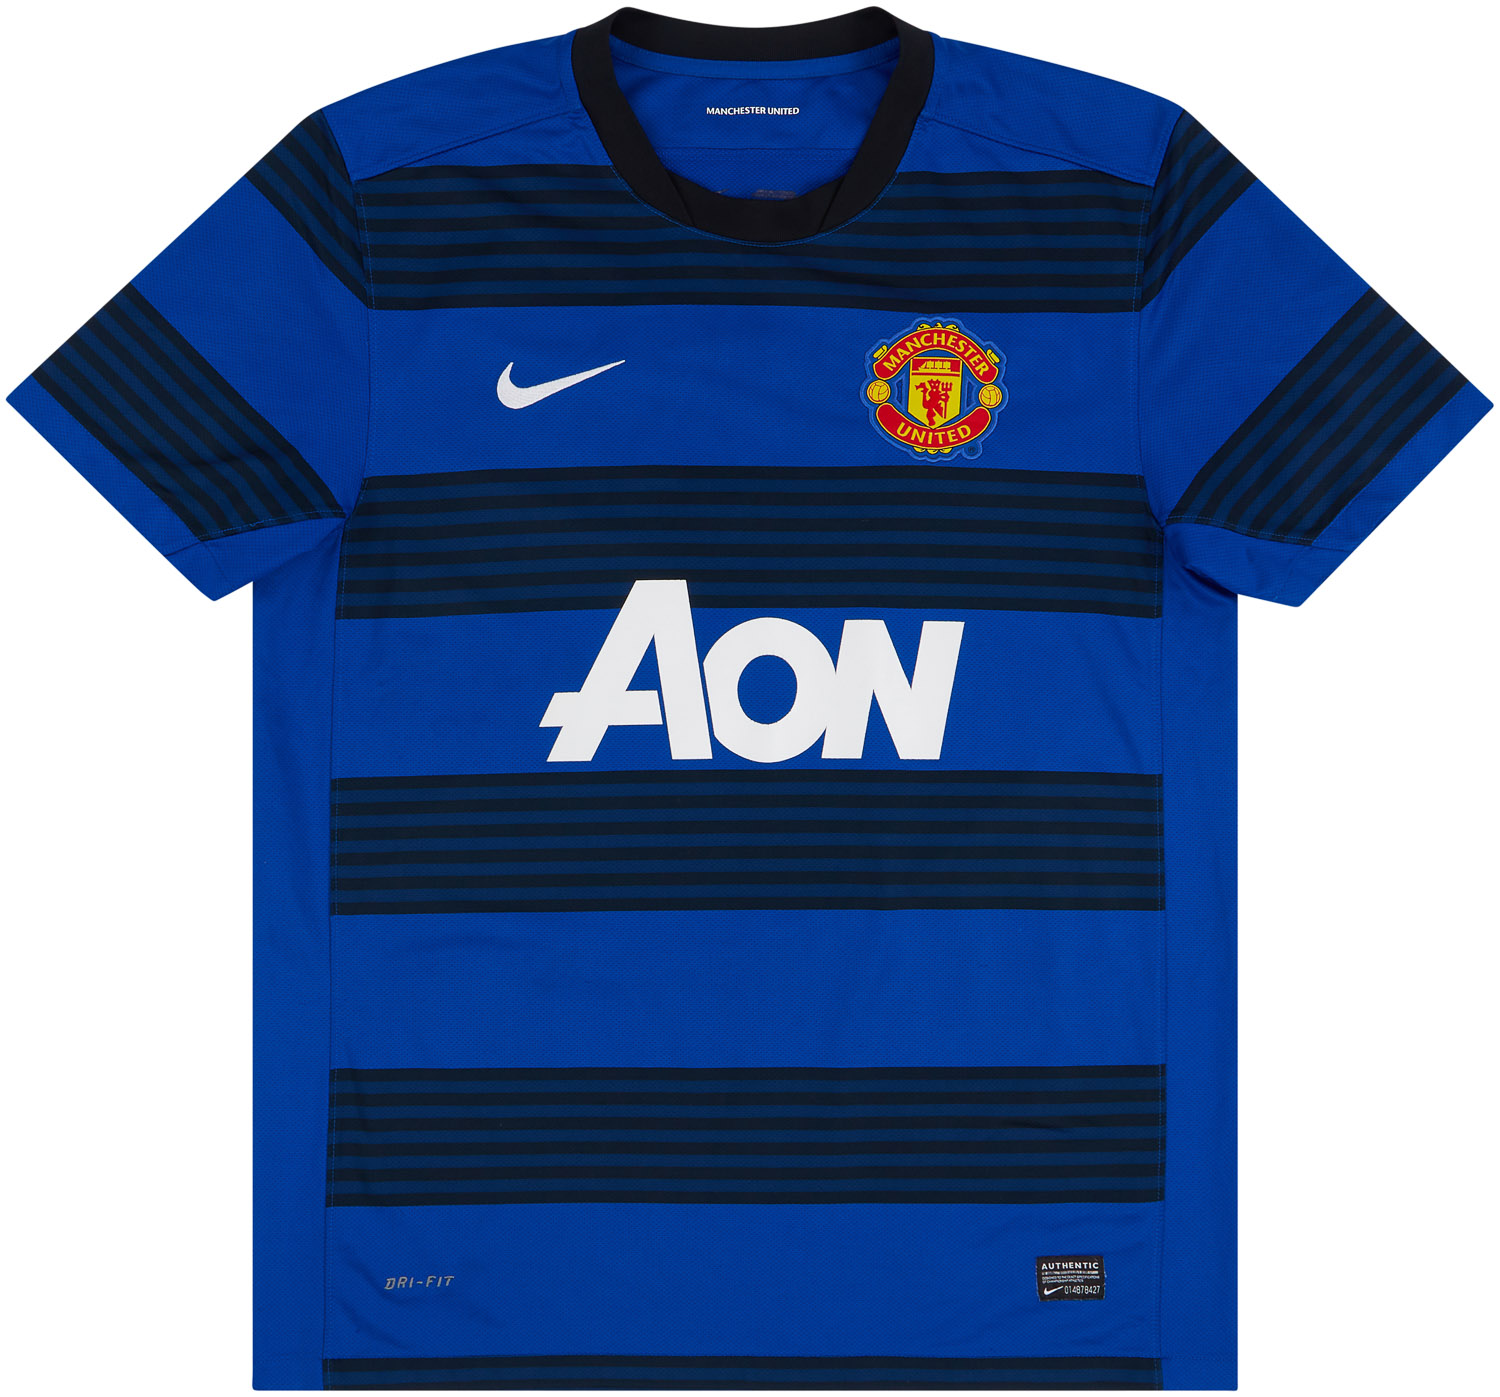 2011-13 Manchester United Away Shirt - 7/10 -